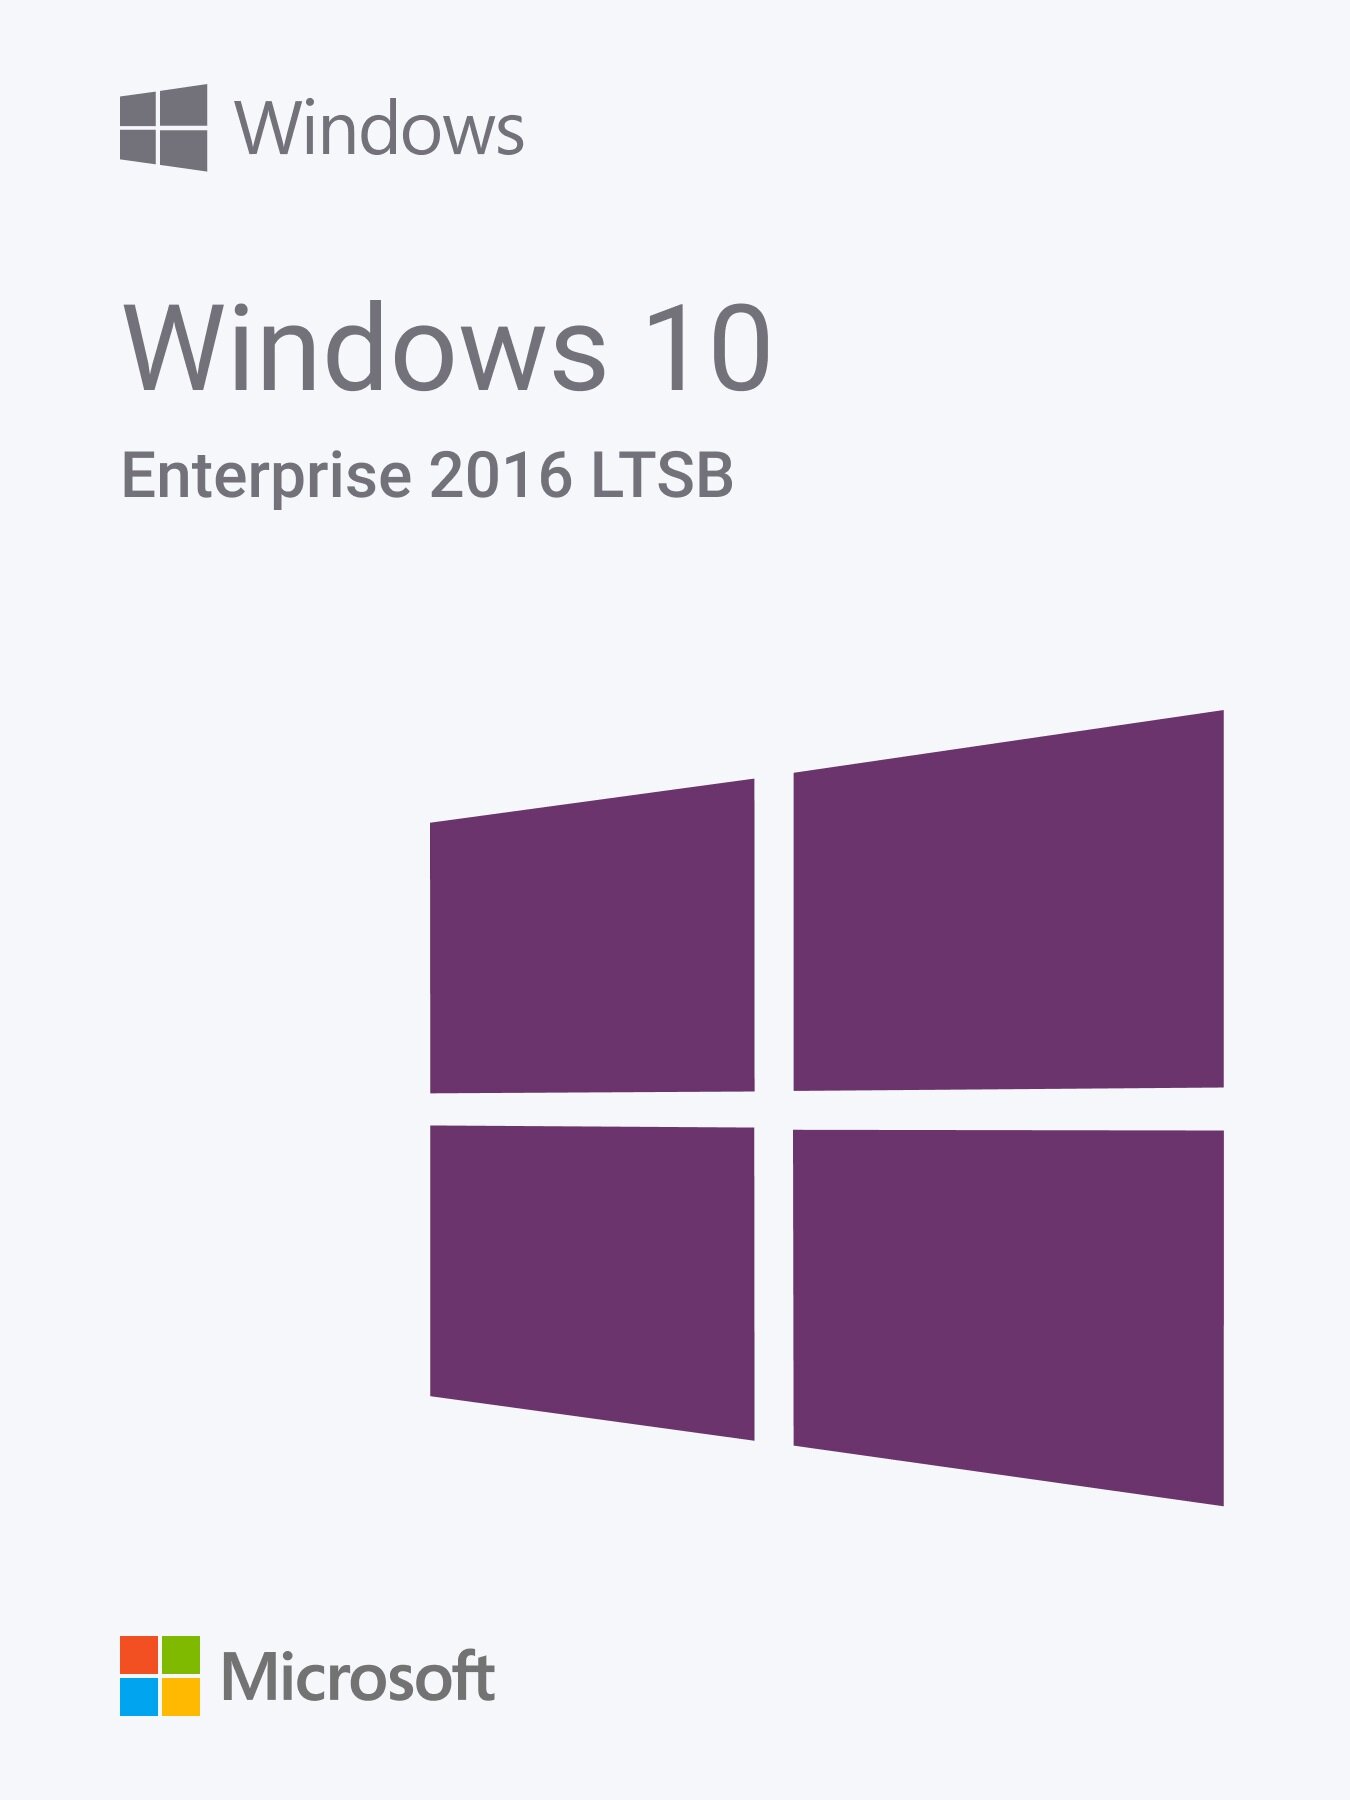 Microsoft Windows 10 Enterprise (Корпоративная) 2016 LTSB / Бессрочная лицензия для 1 устройства